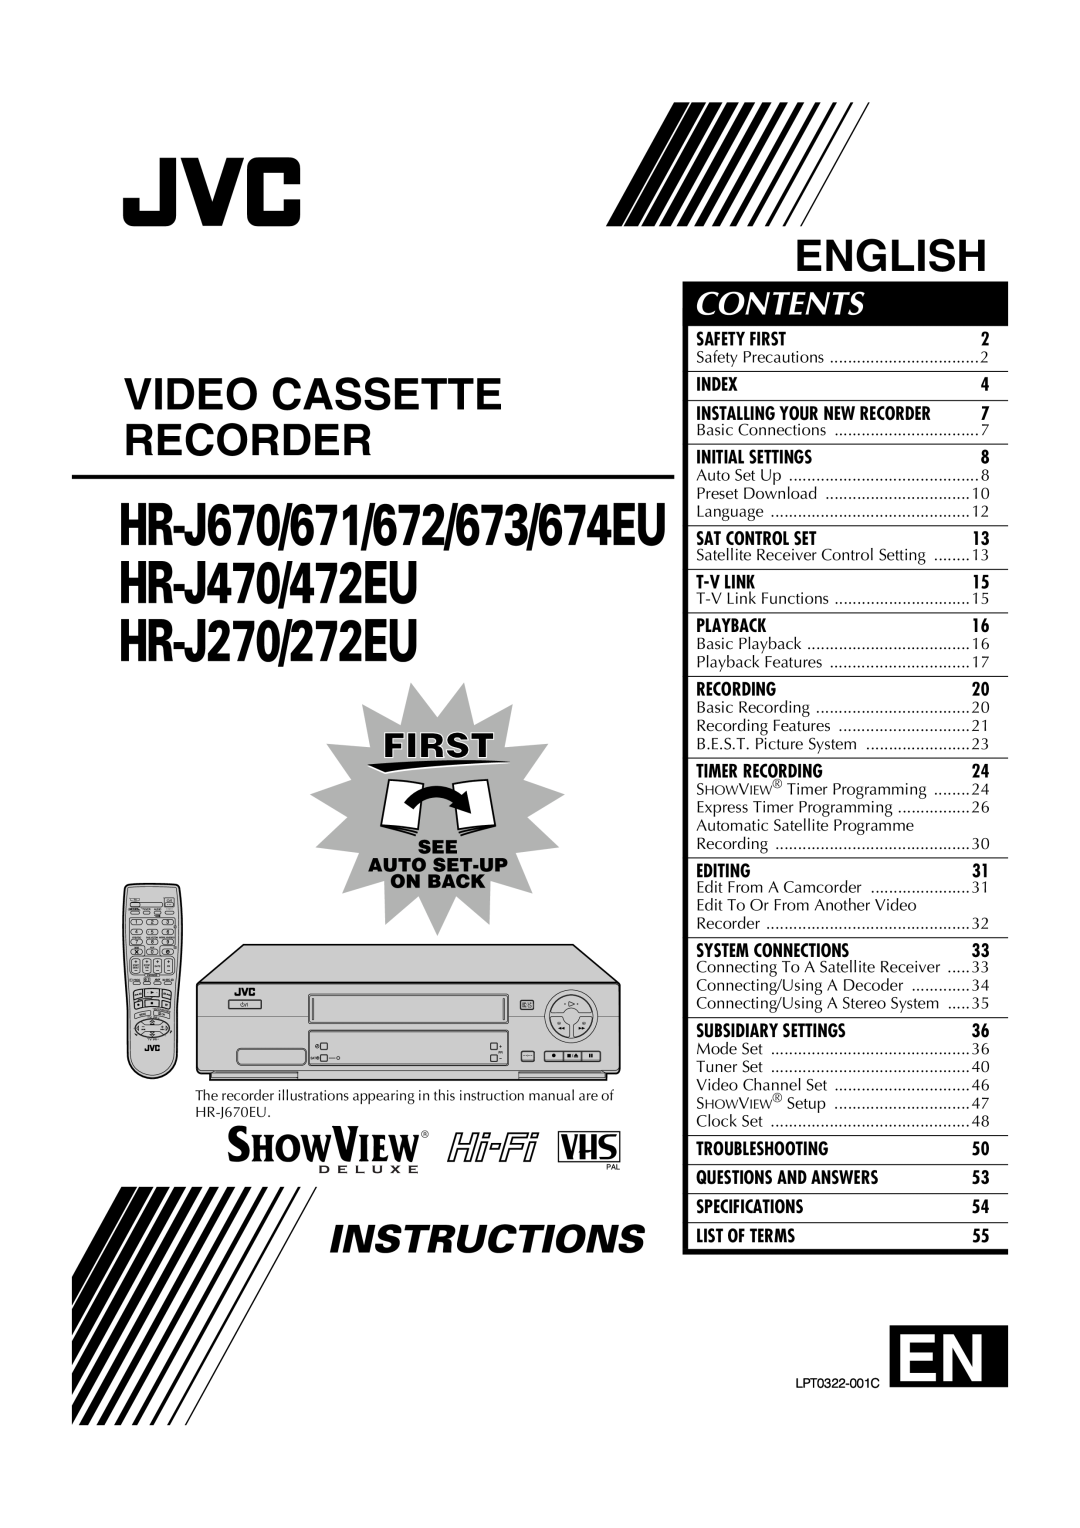 JVC HR-J674EU instruction manual Video Cassette Recorder, English, Contents 